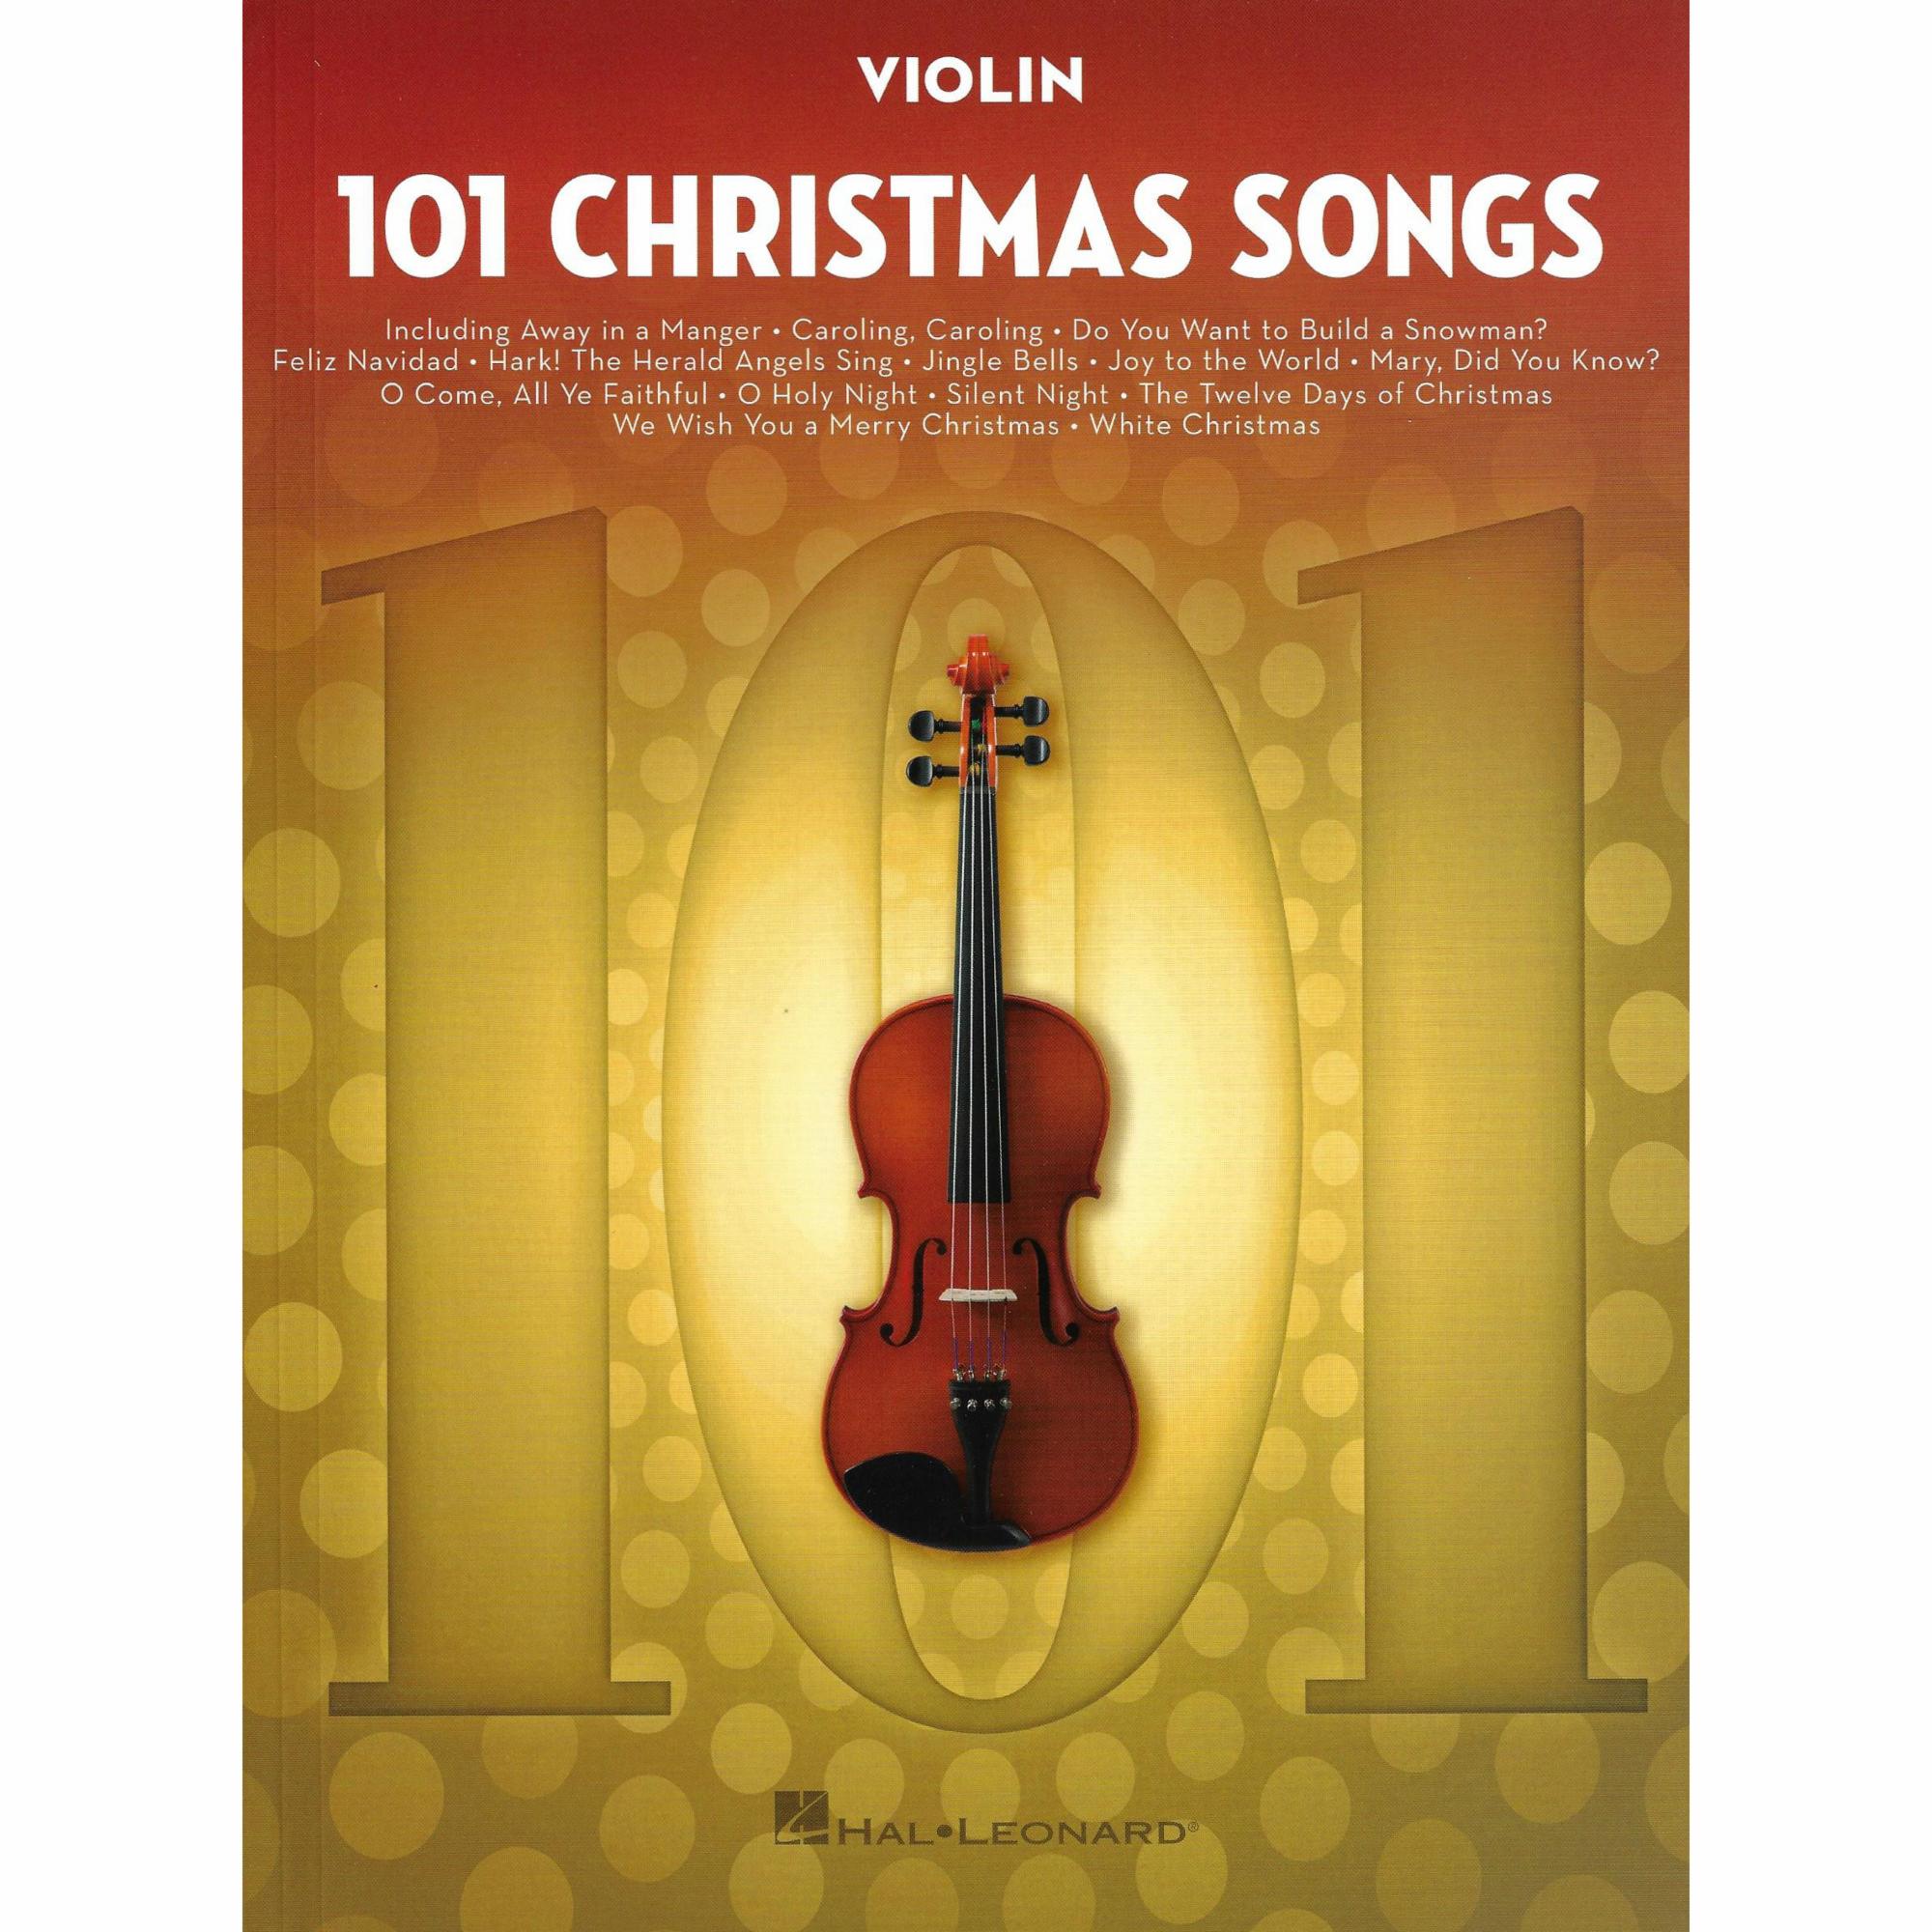 101 Christmas Songs for Violin, Viola, or Cello